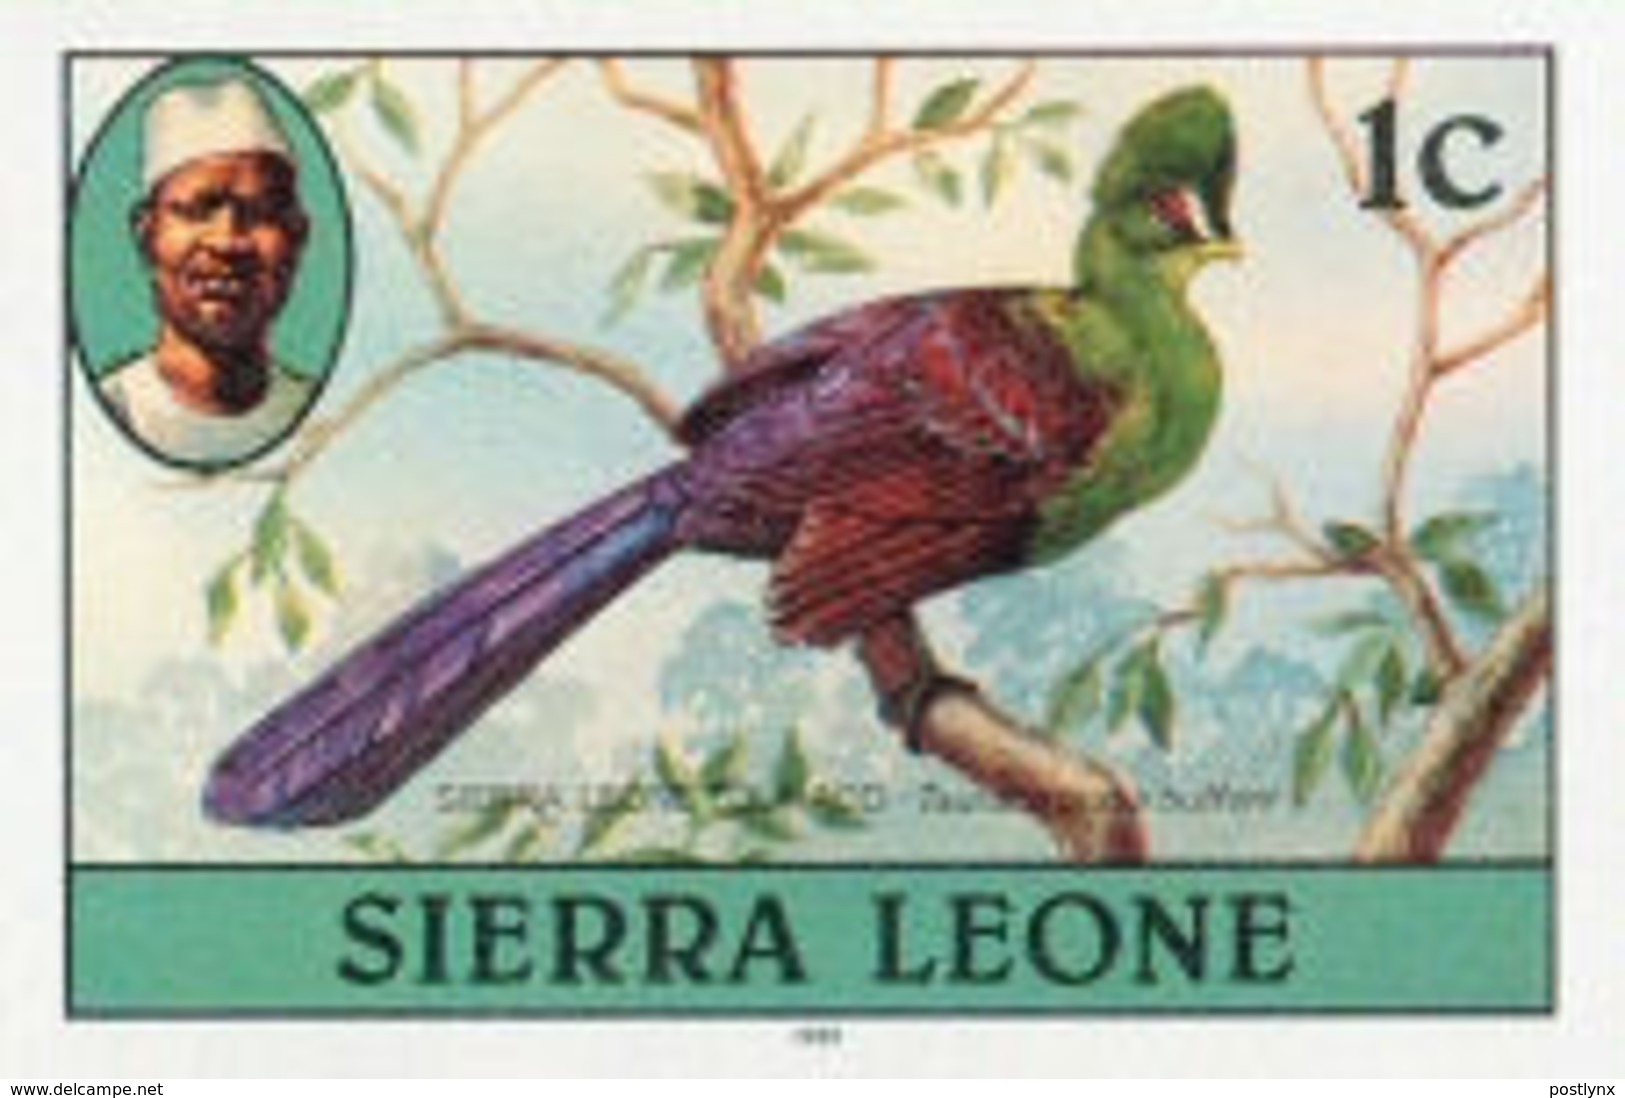 SIERRA LEONE 1980 Turaco Birds 1c Impr.1981 Wmk CA IMPERF - Cuco, Cuclillos